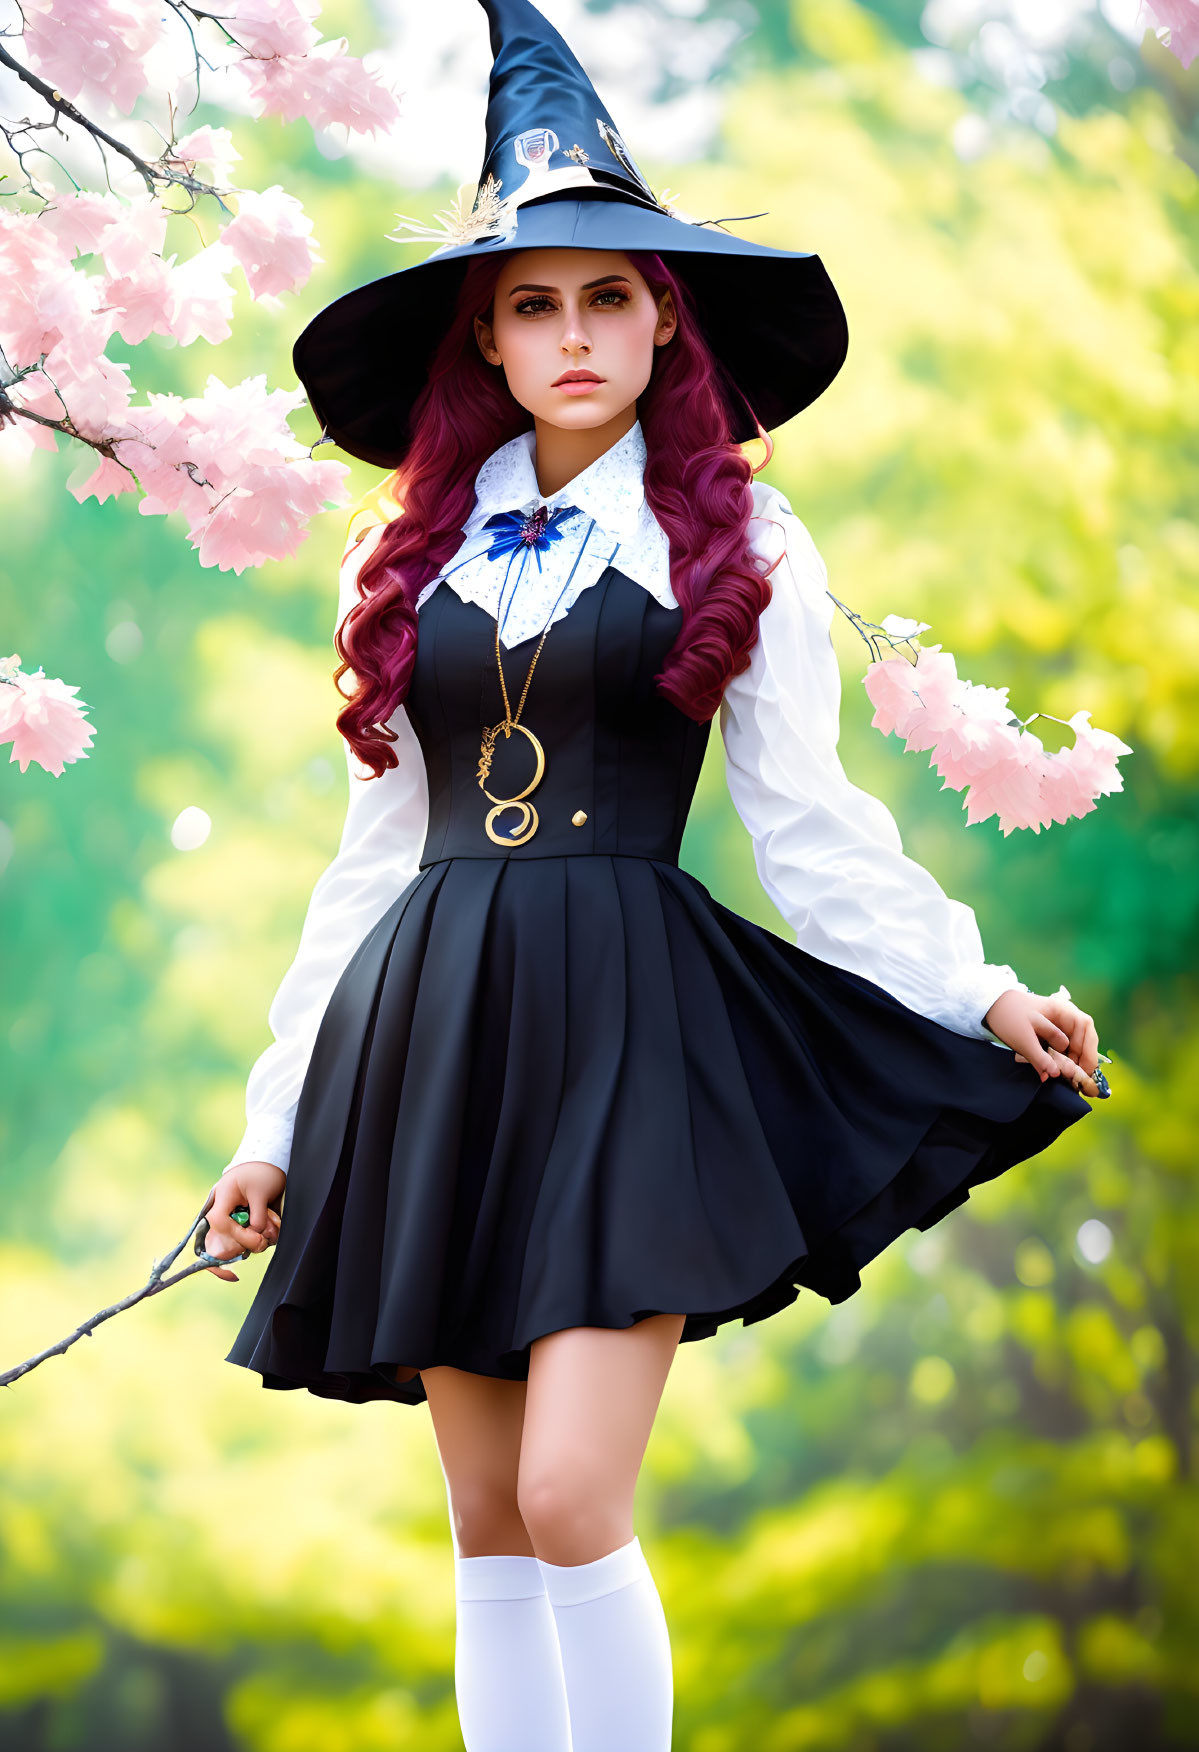 Witch in a Sakura tree park.